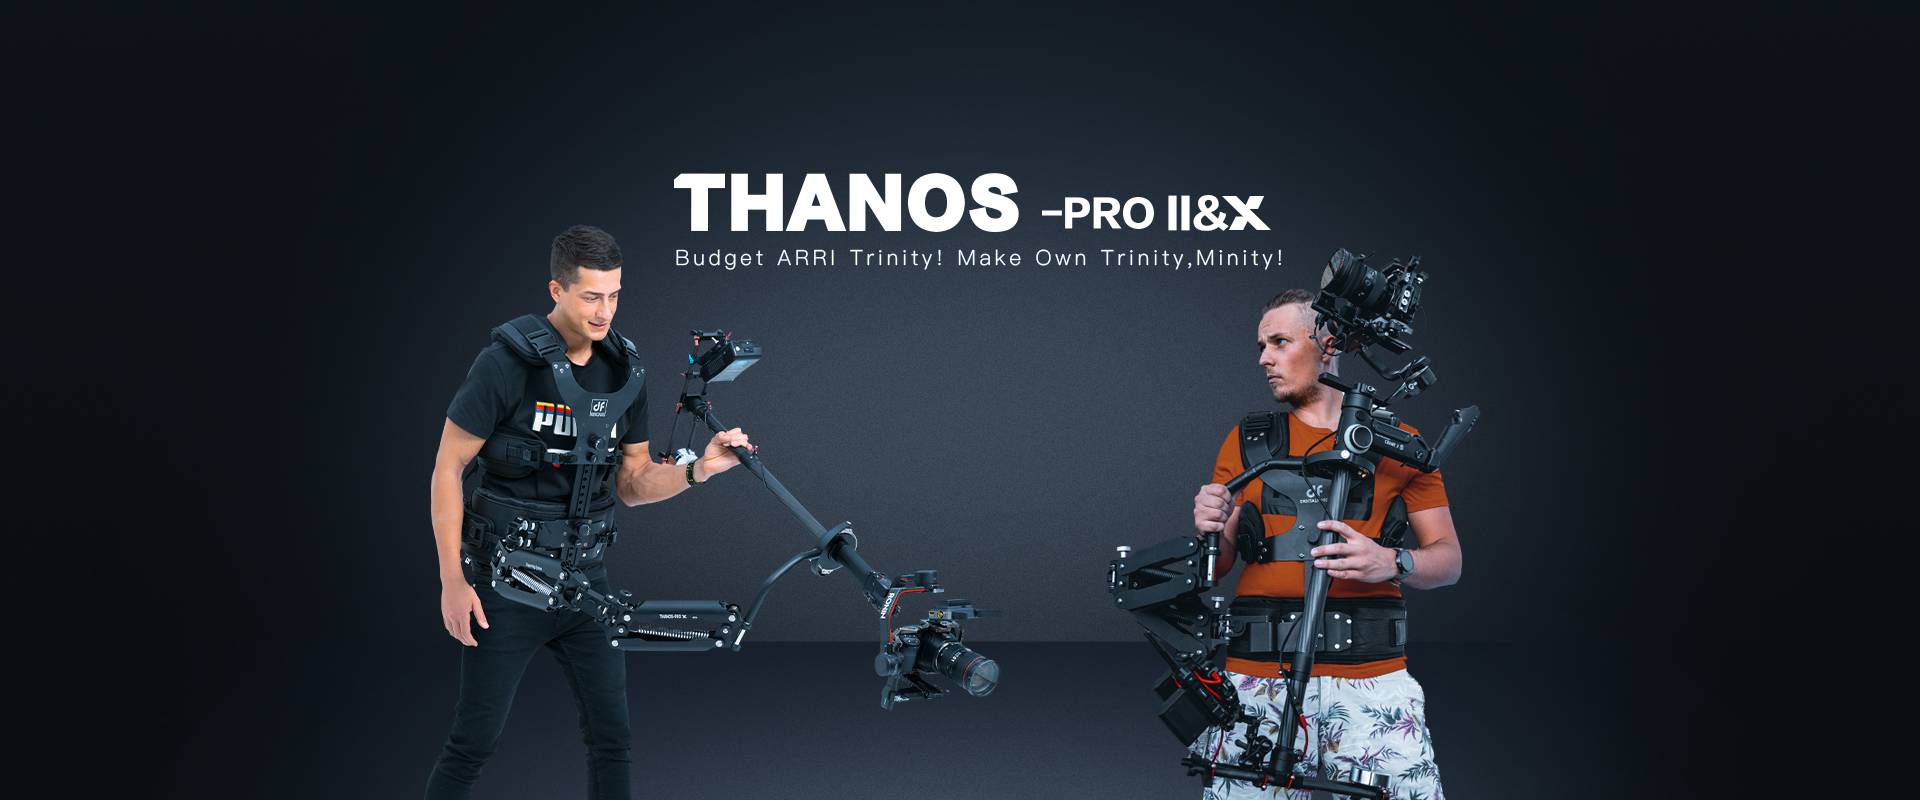 Thanos-Pro II&X